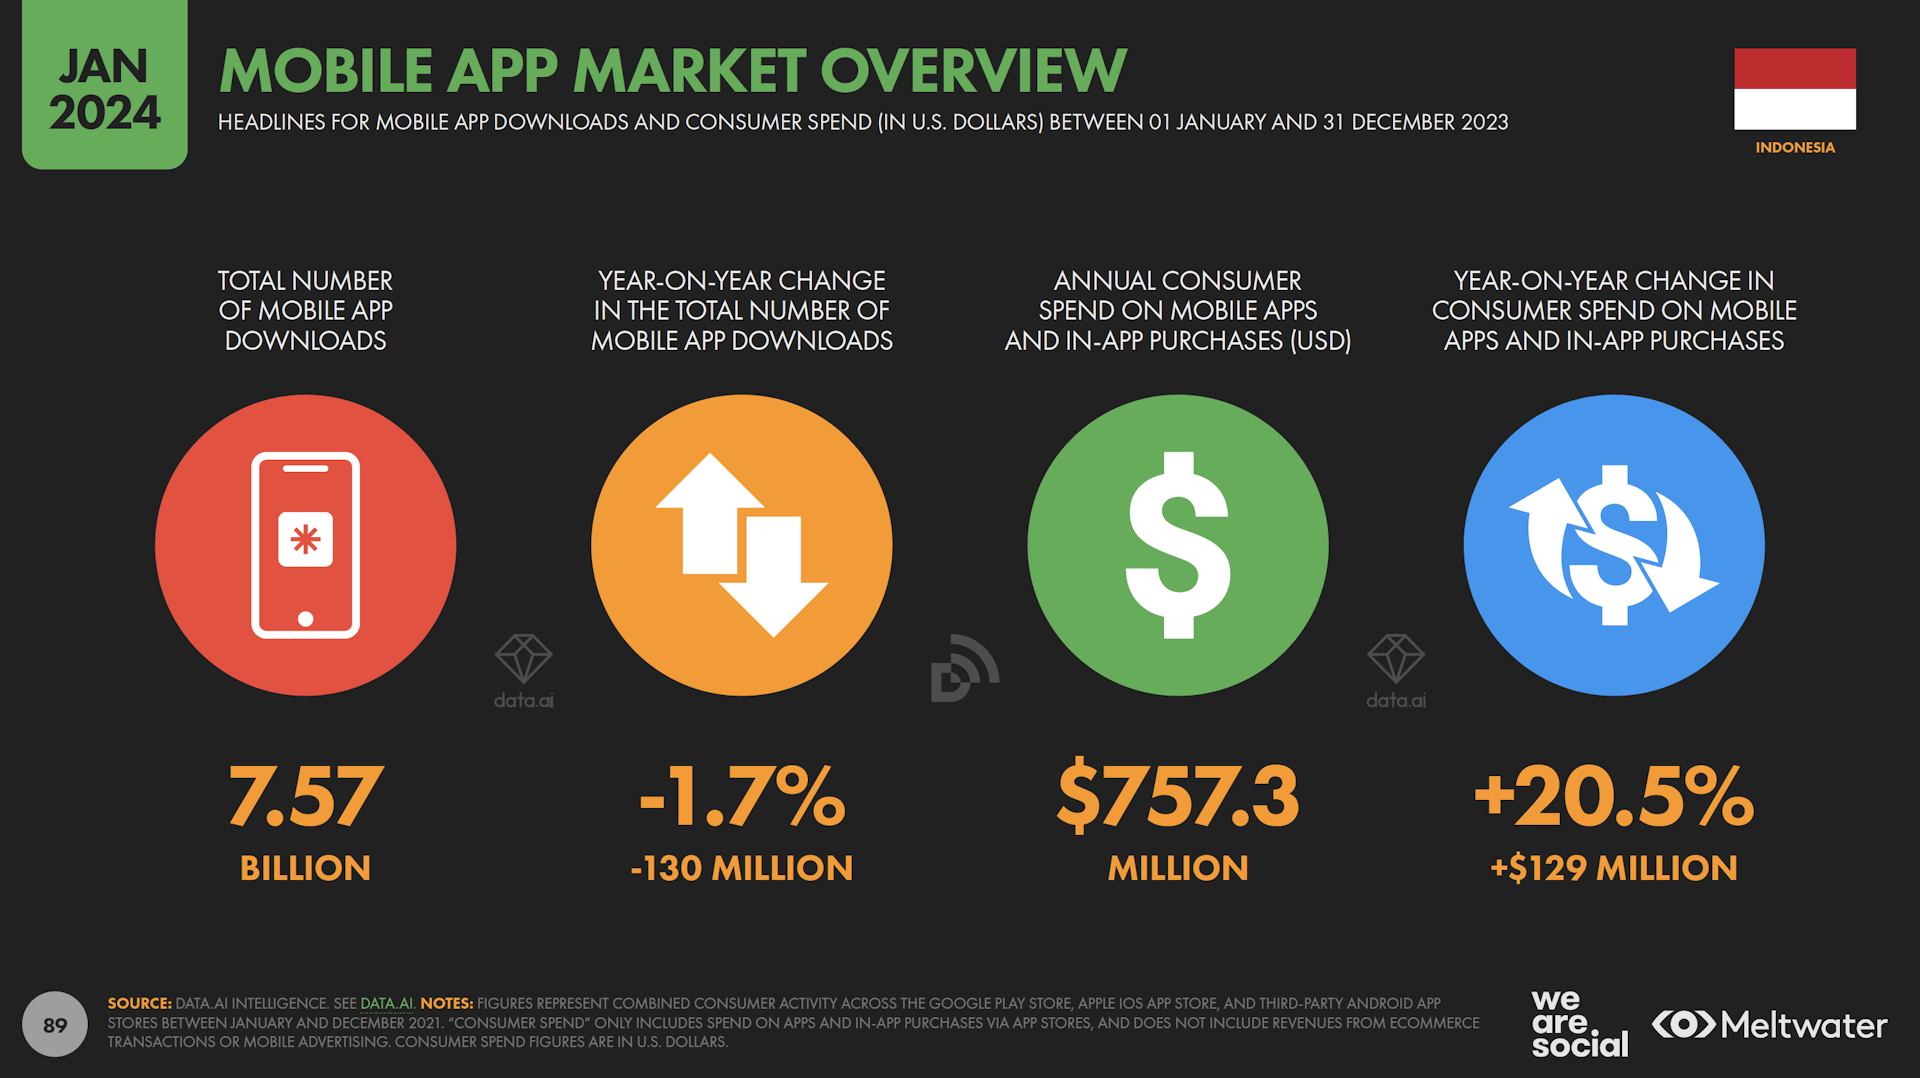 Mobile app market overview based on Global Digital Report 2024 for Indonesia